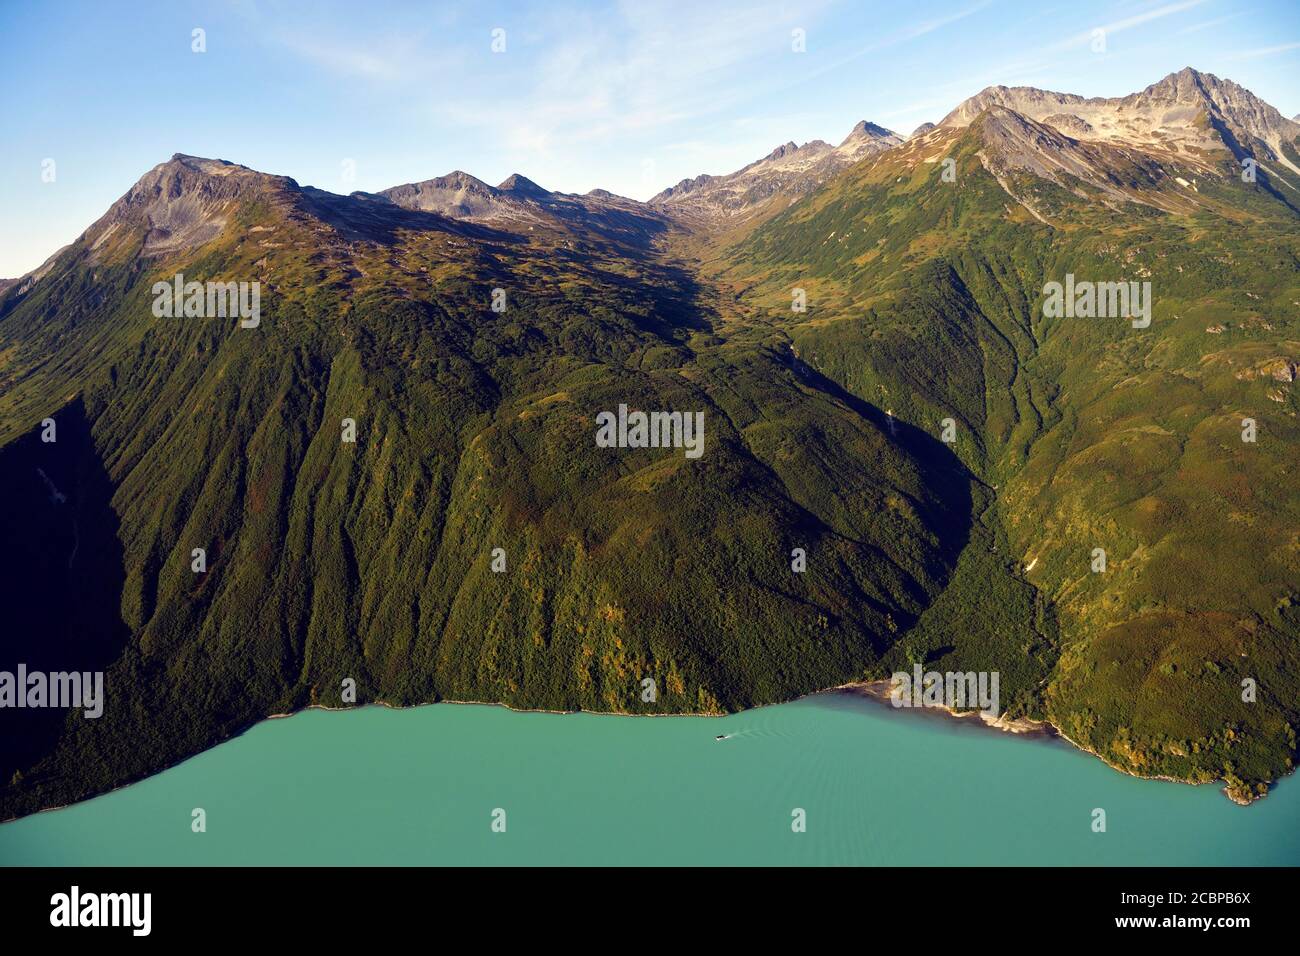 Steep forested mountainsides and an emerald green lake, Lake Clark National Park, Alaska, USA Stock Photo